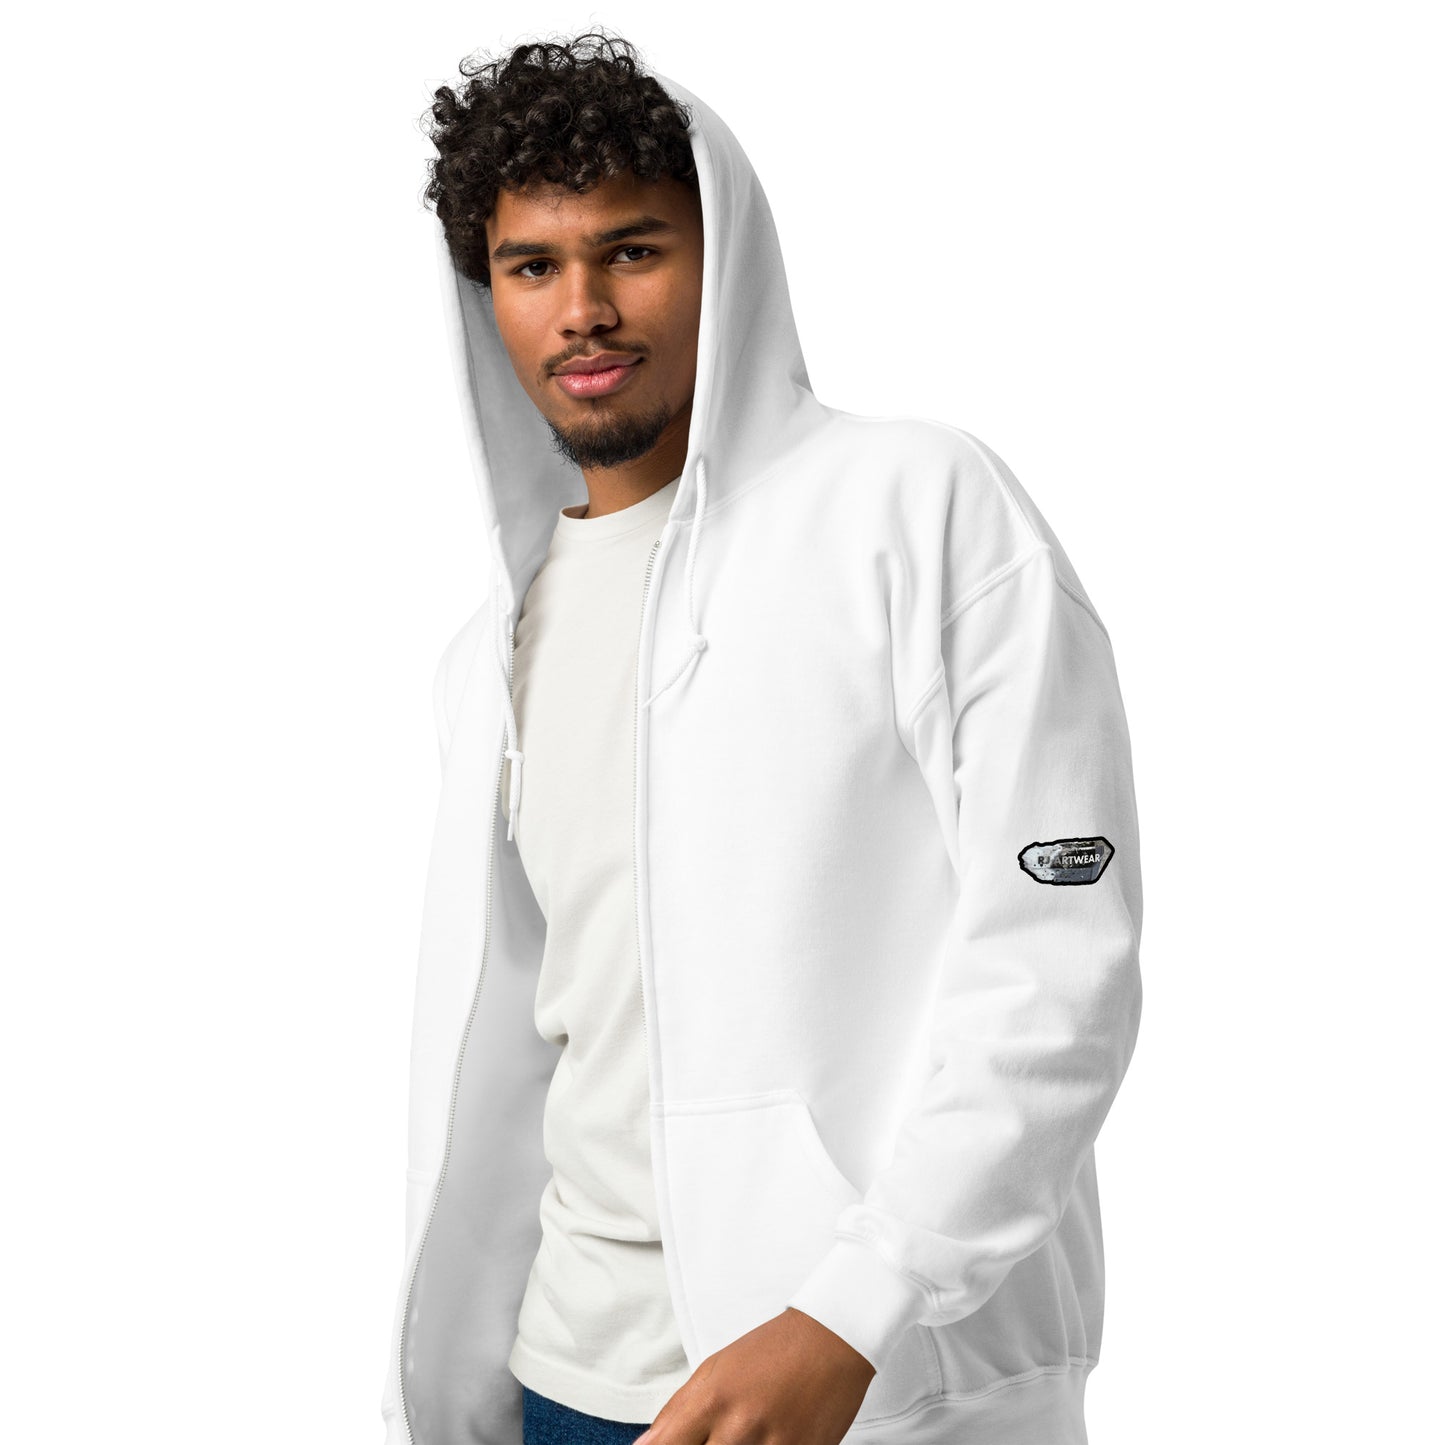 Quartz Collage Oval - Unisex heavy blend zip hoodie